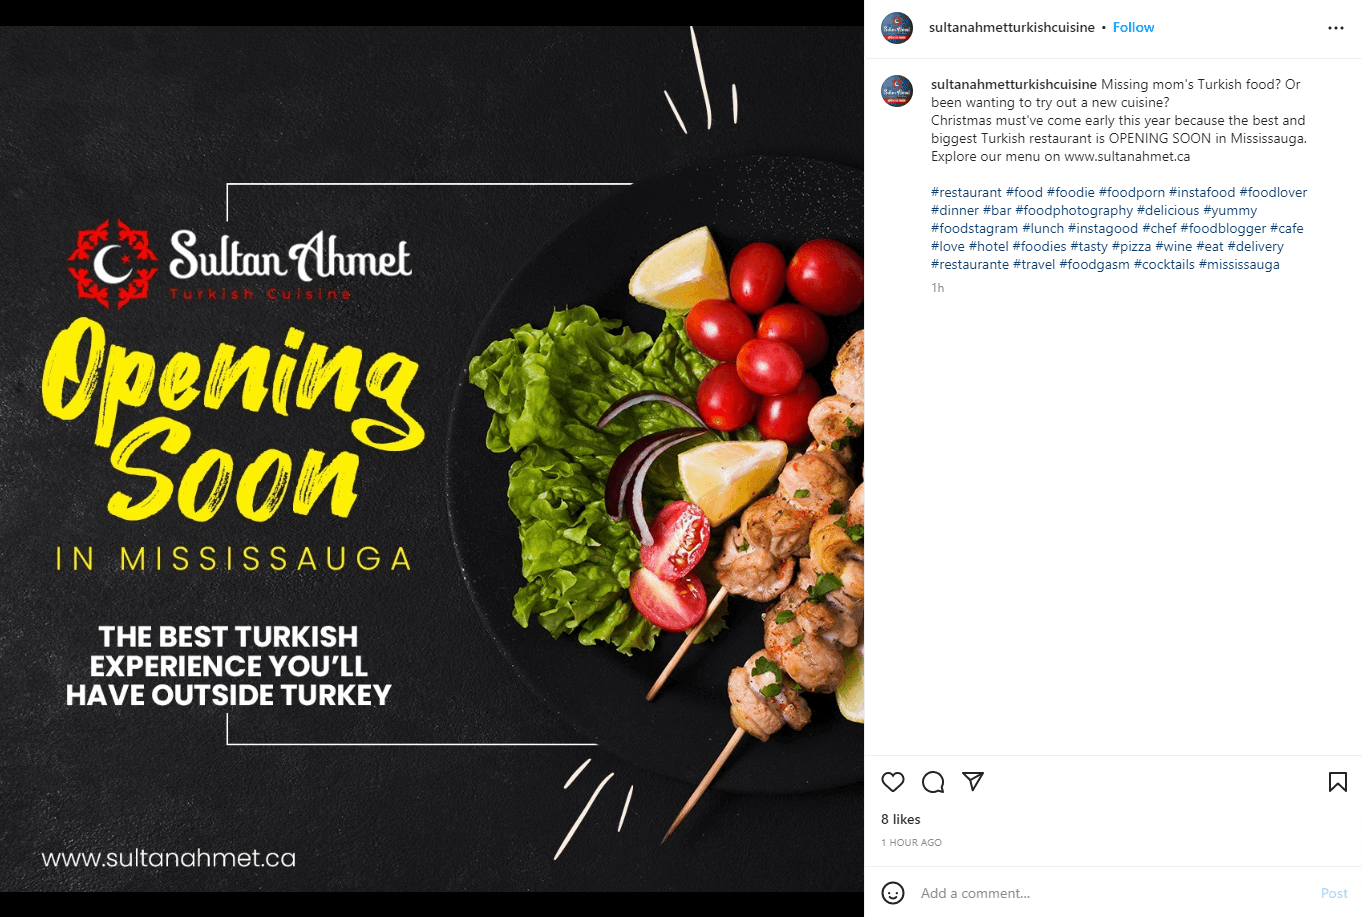 Sultan Ahmet Cuisine Instagram Post